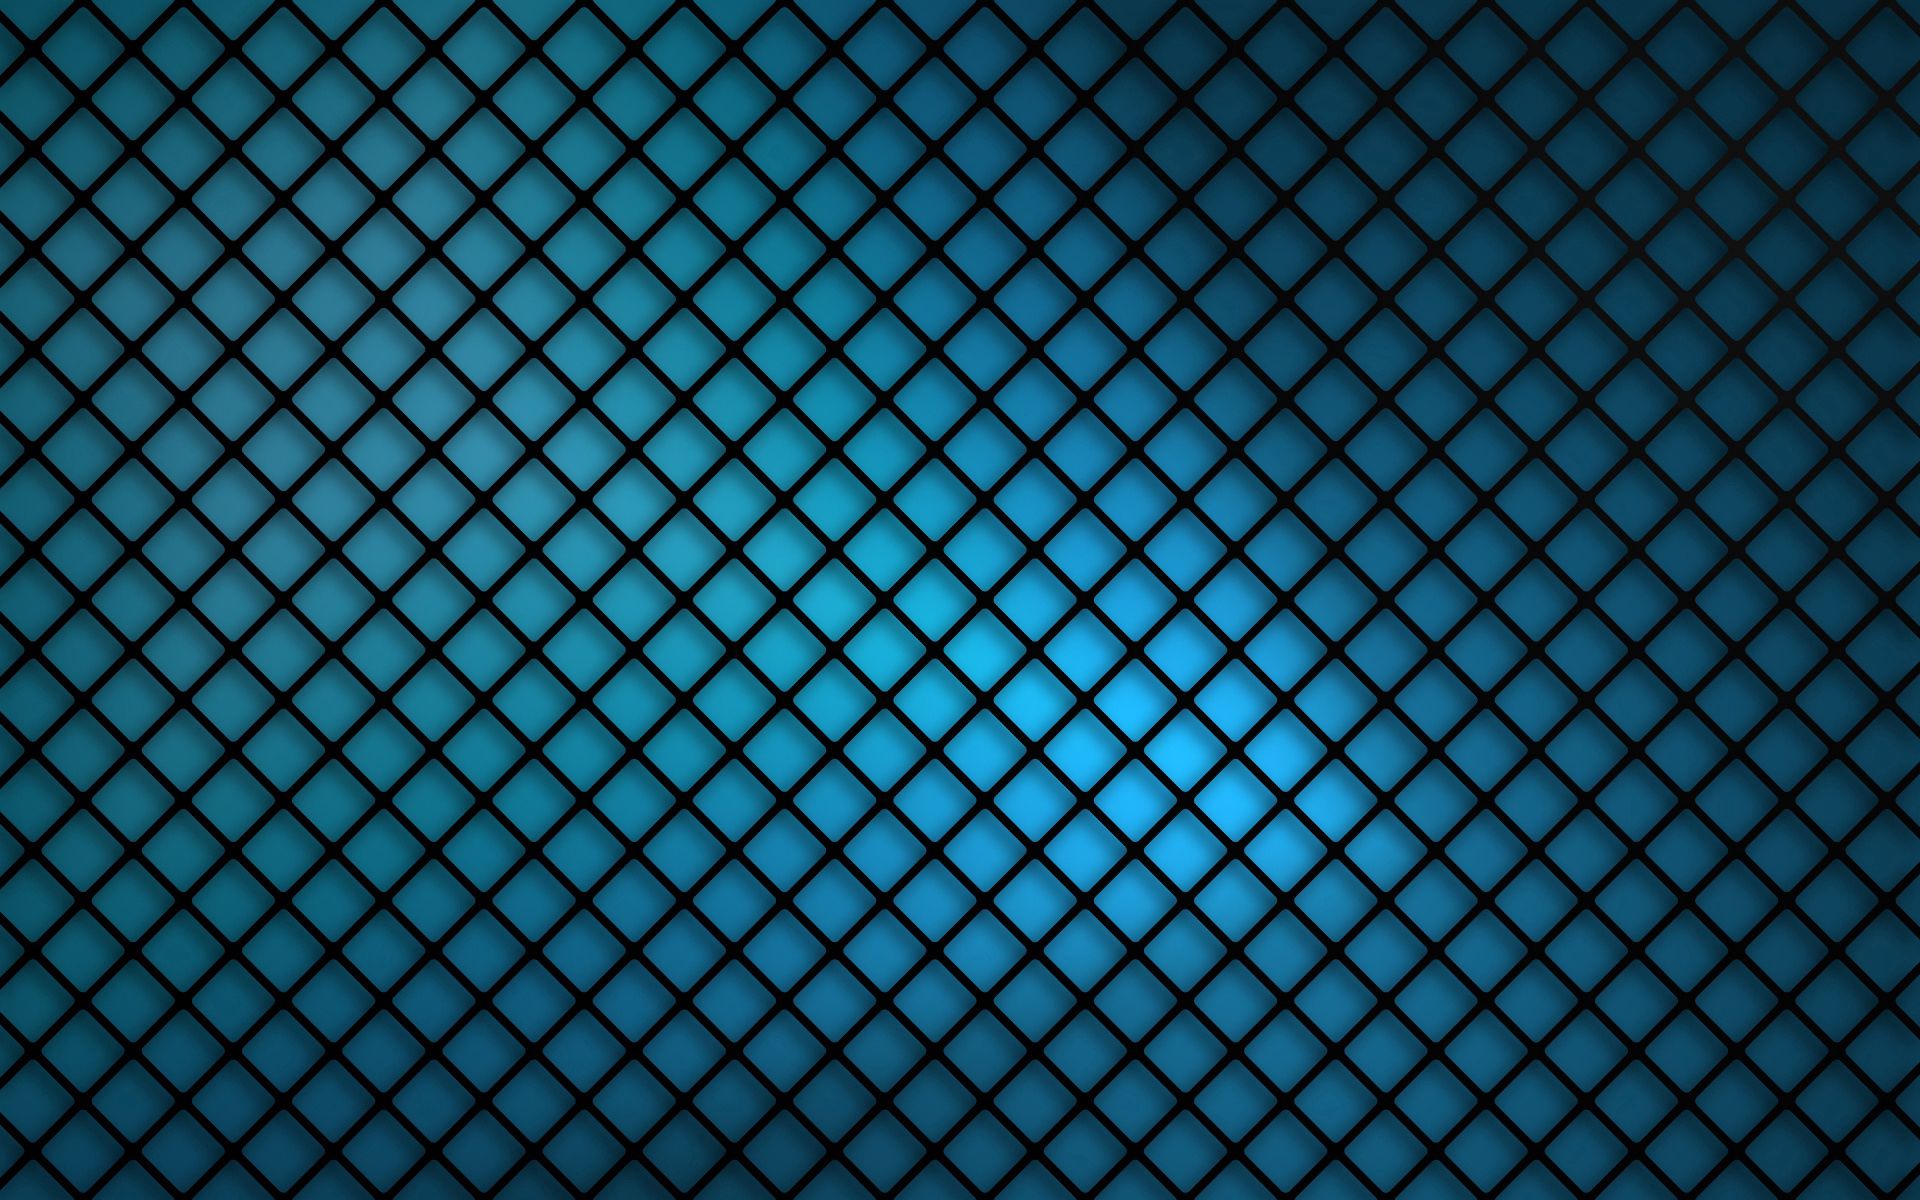 grid, texture, textures, background, dark, shine, light, surface lock screen backgrounds